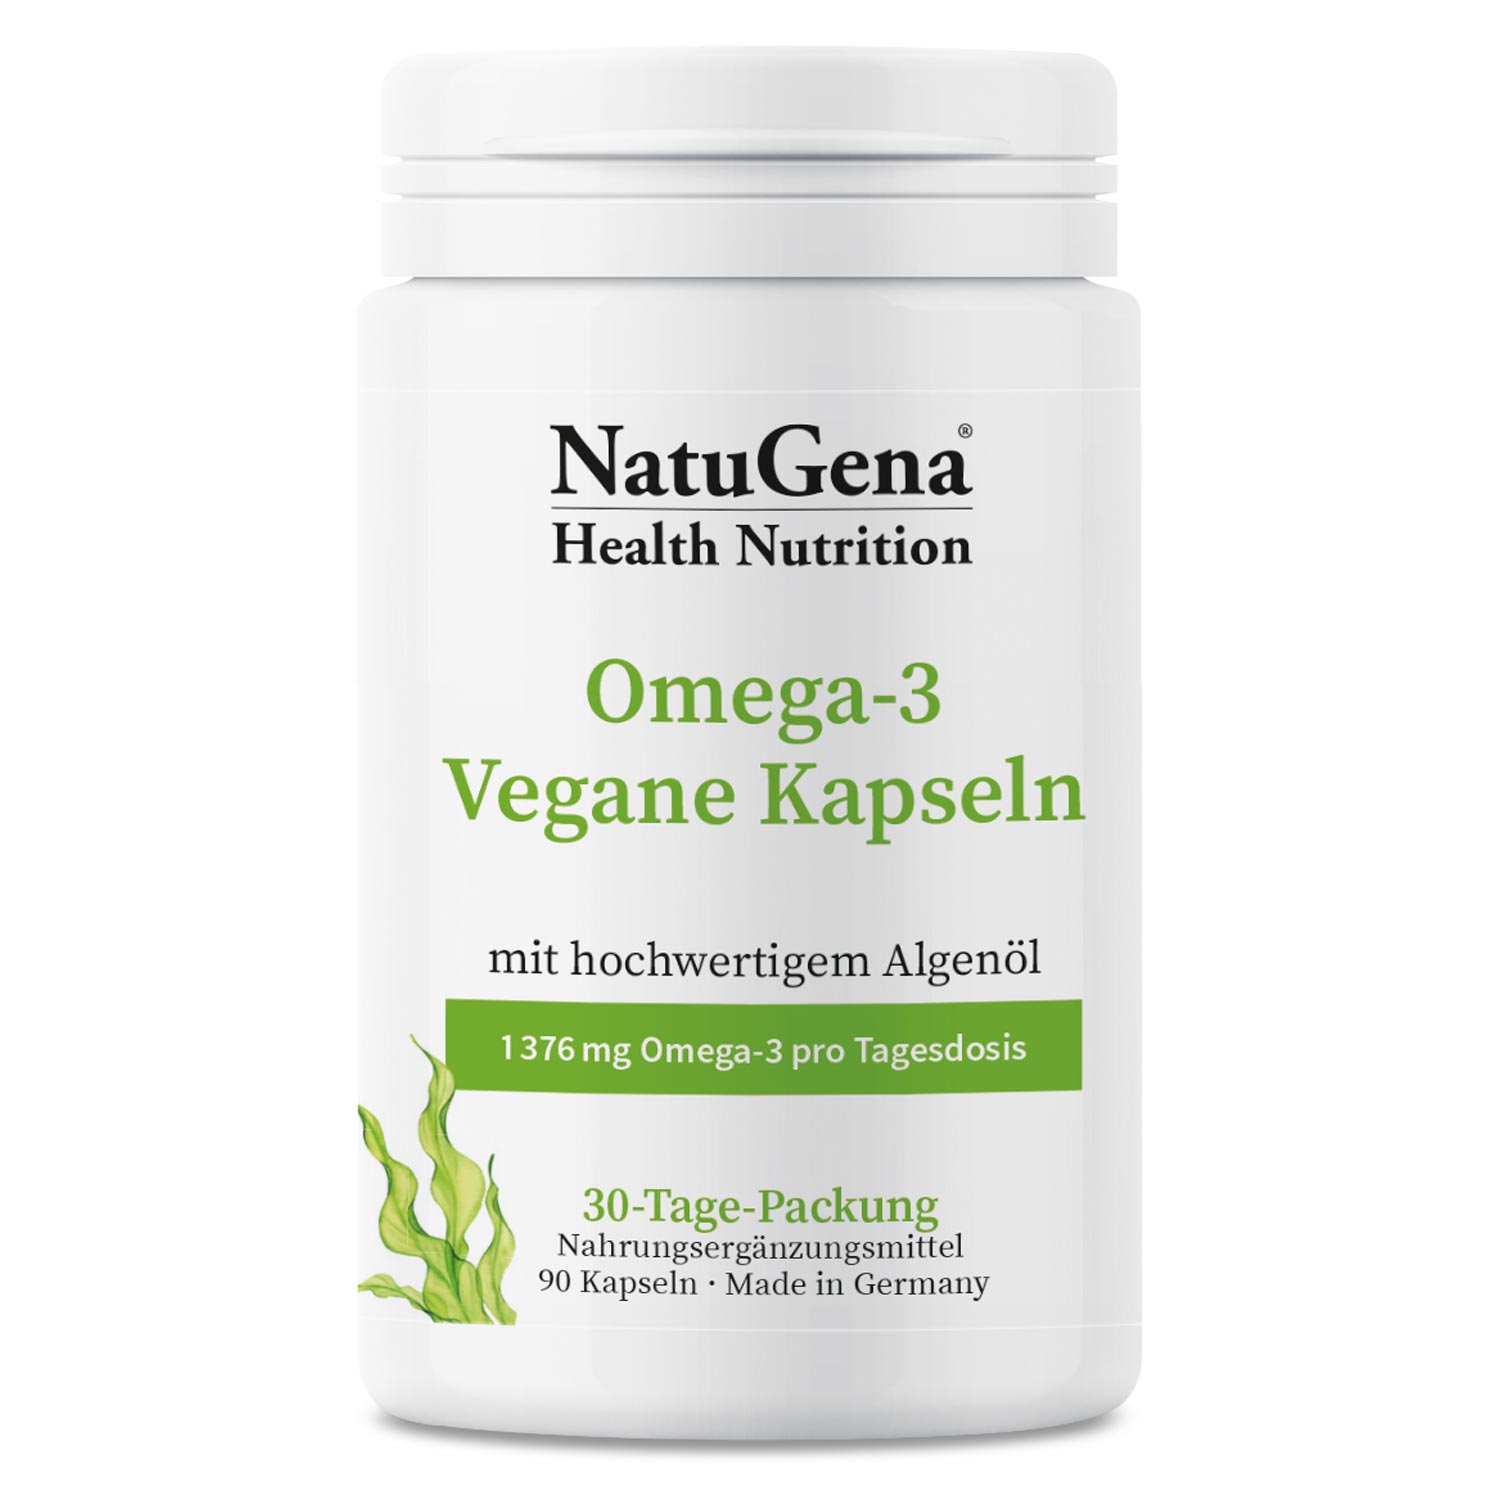 Omega-3 Vegane Kapseln von NatuGena - 90 Kapseln